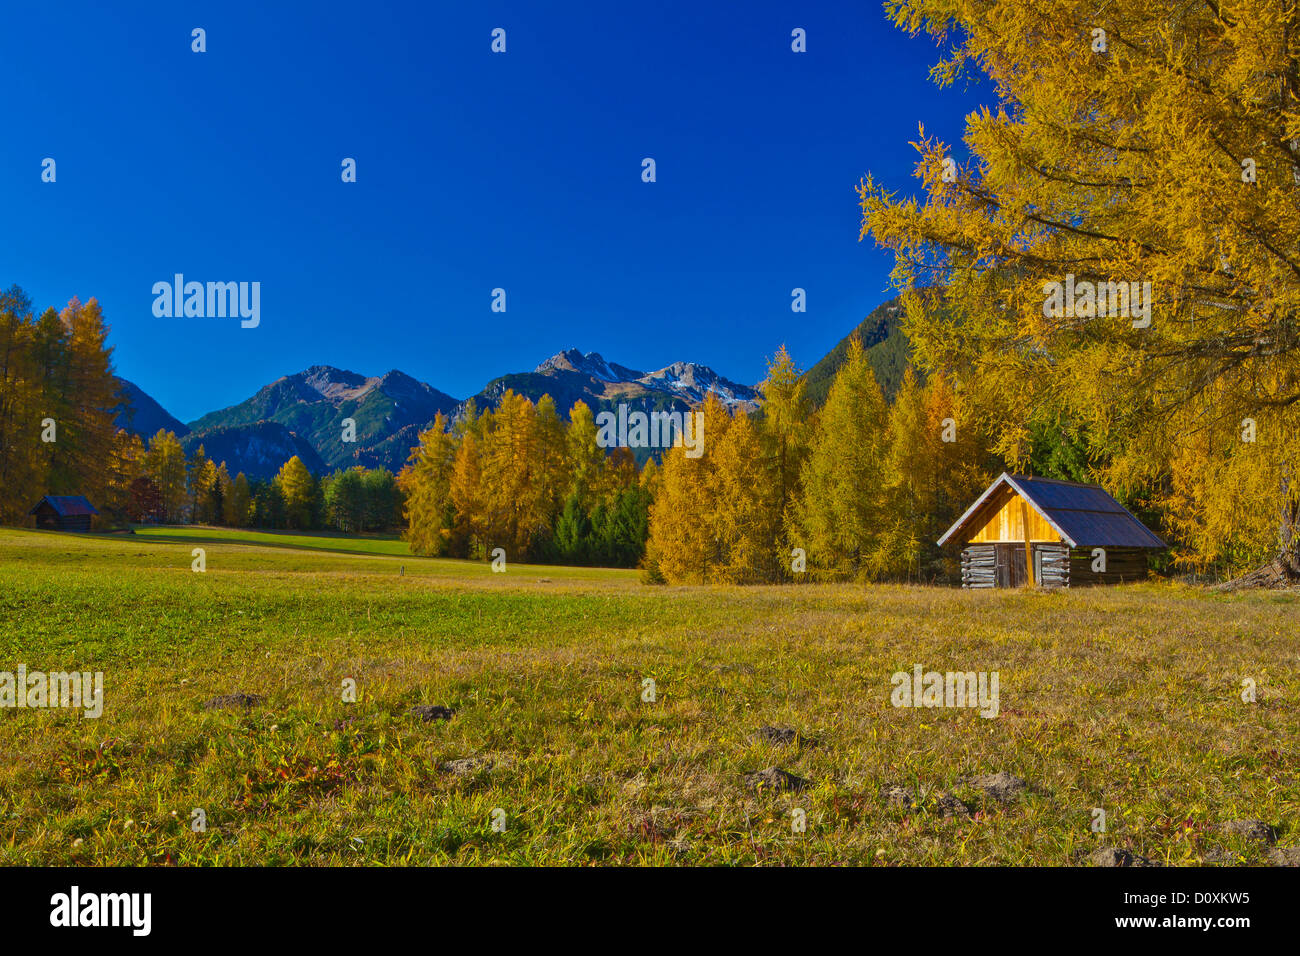 Austria, Europe, Tyrol, Tirol, Mieming, chain, plateau, Obsteig, Holzleiten, meadow, Stadel, trees, larches, Yellow, green, blue Stock Photo